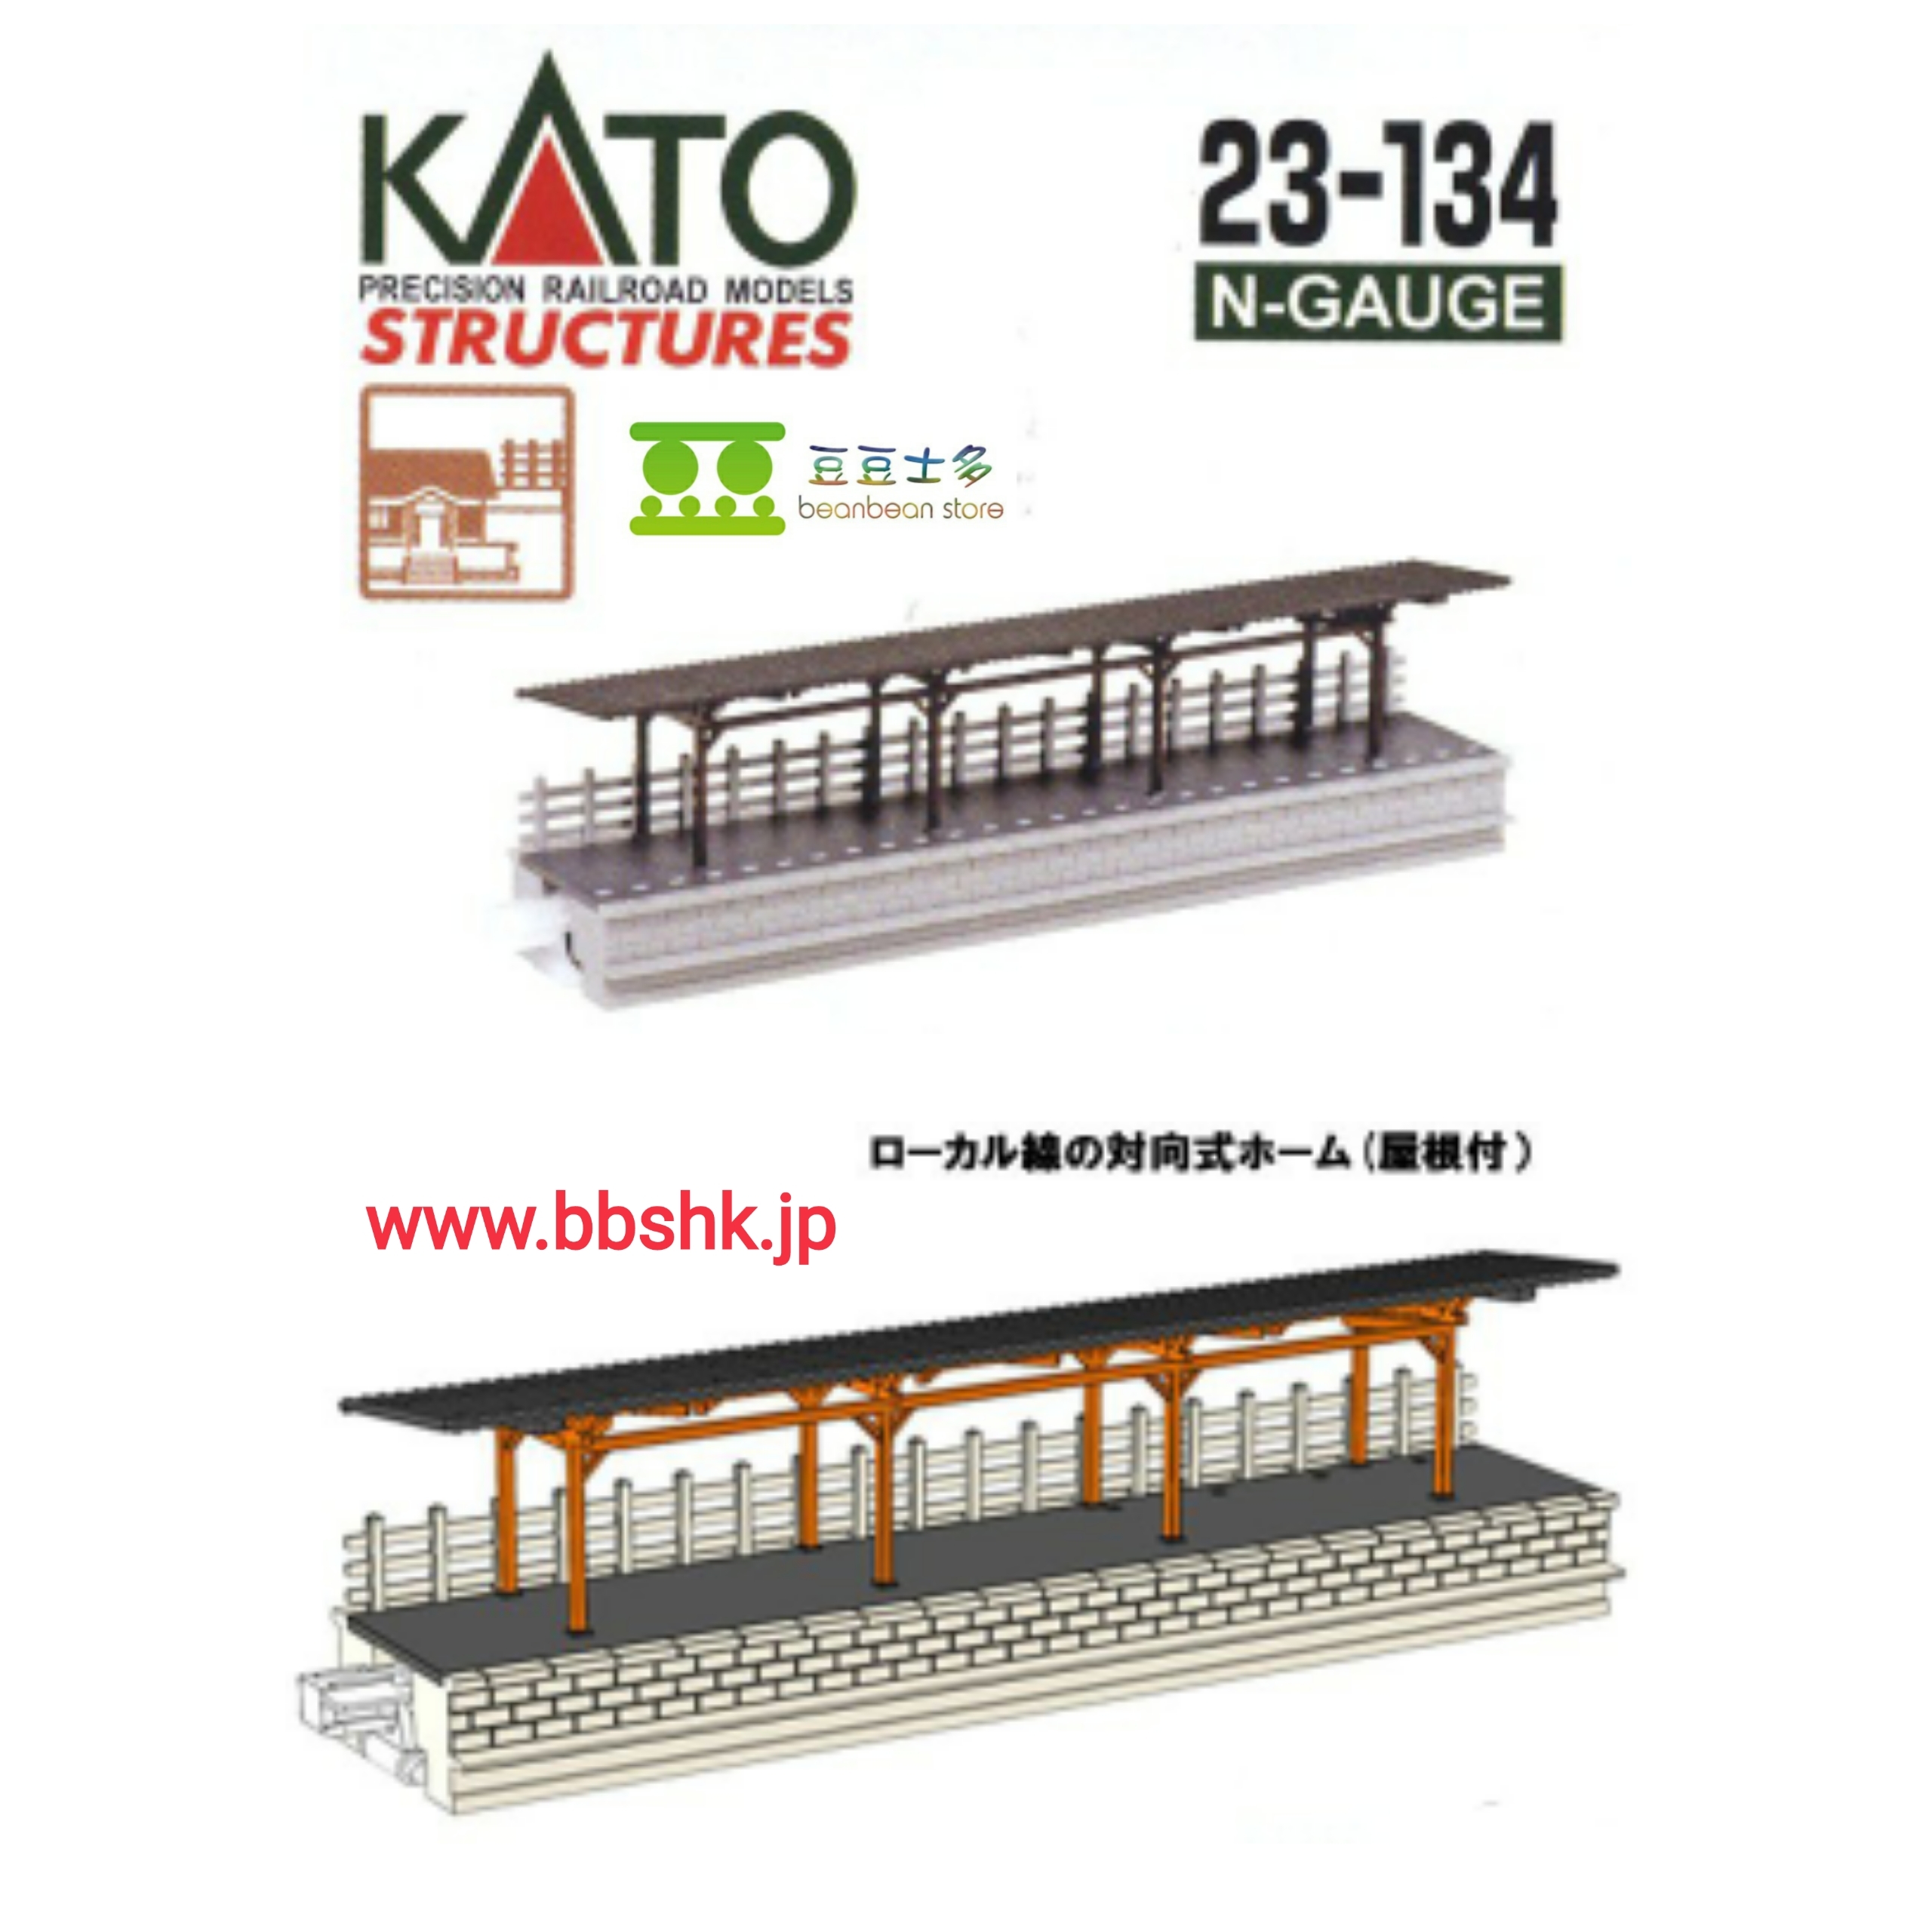 KATO 23-134 ローカル線の対向式ホーム (屋根付)